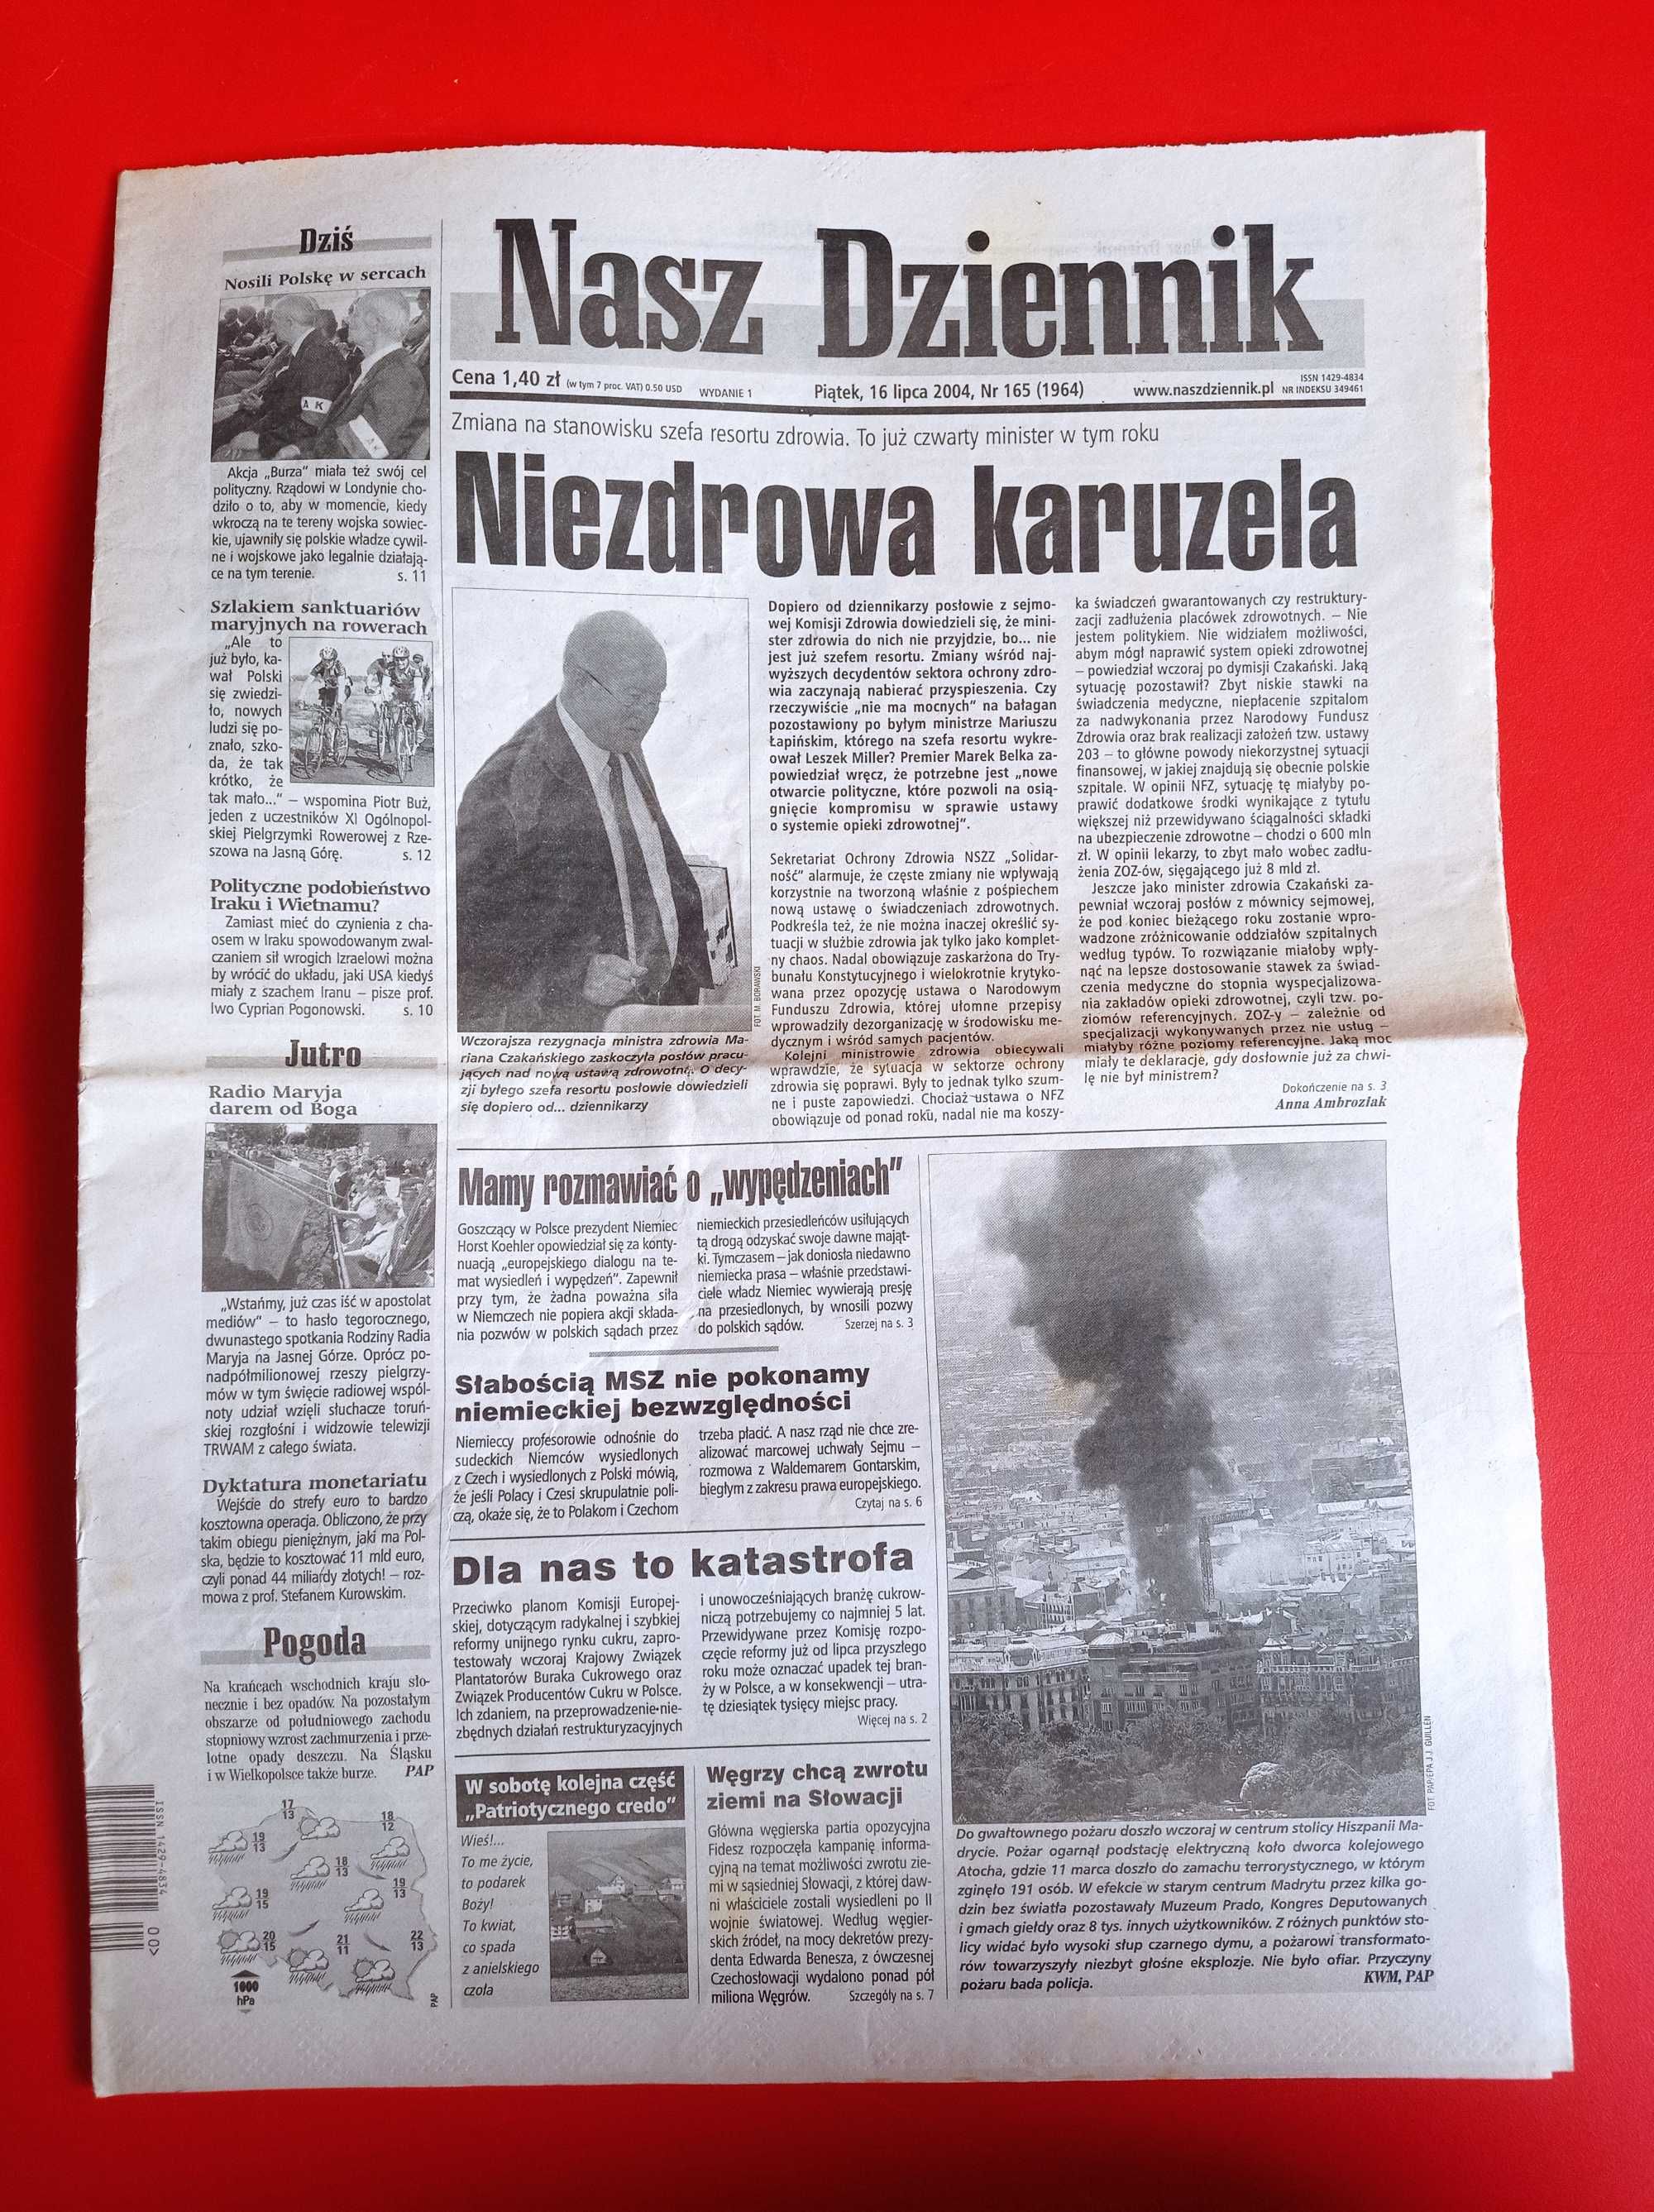 Nasz Dziennik, nr 165/2004, 16 lipca 2004